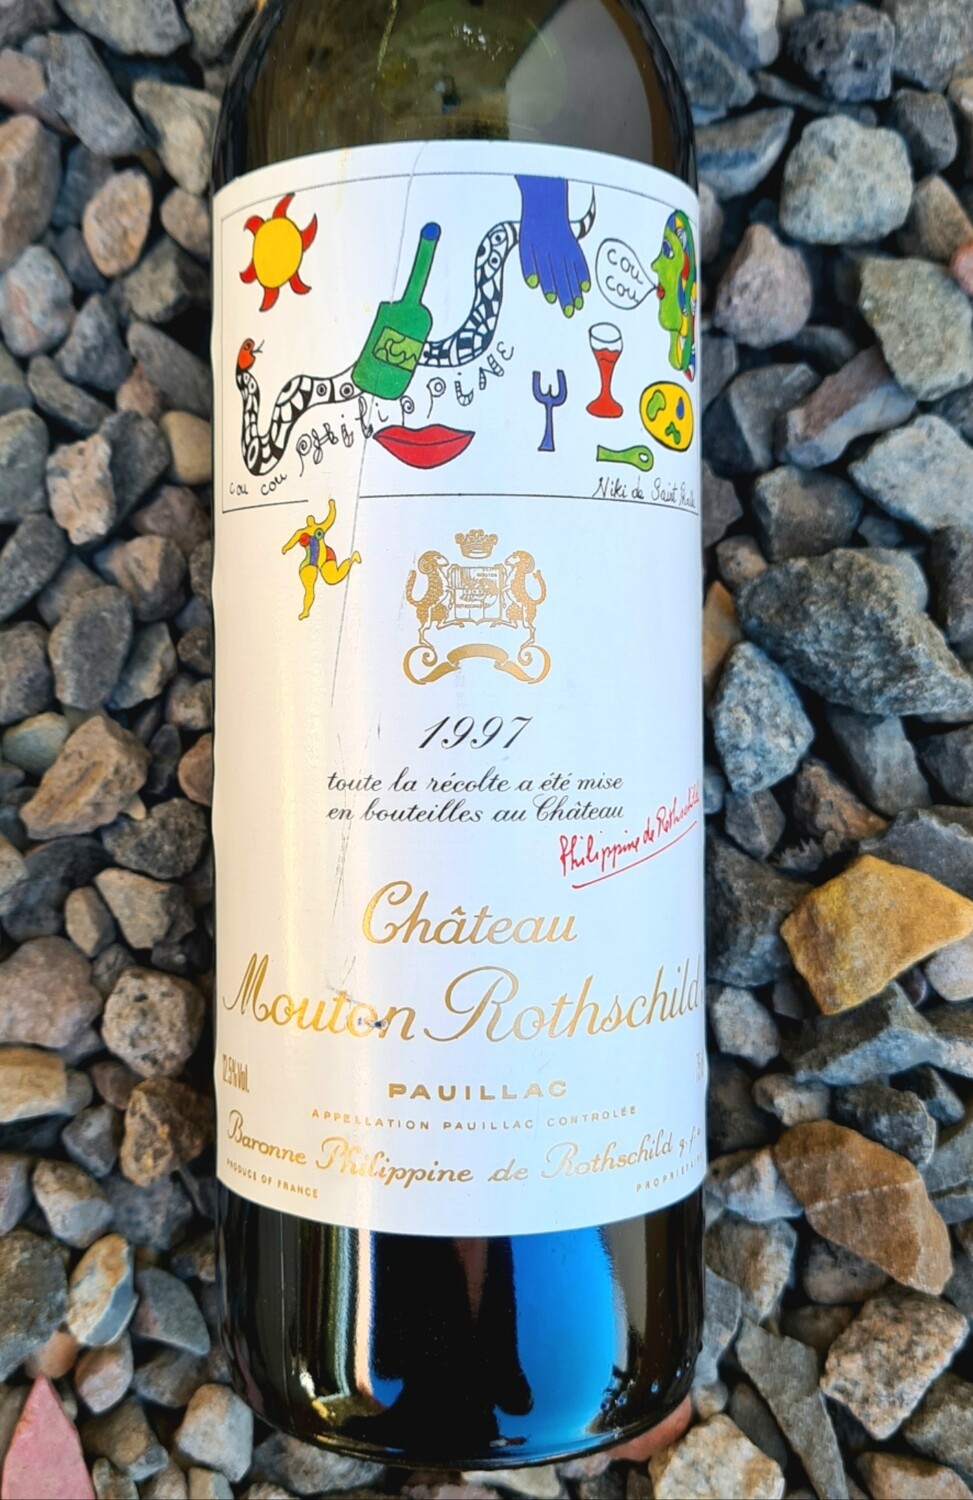 Chateau Mouton Rothschild 1997